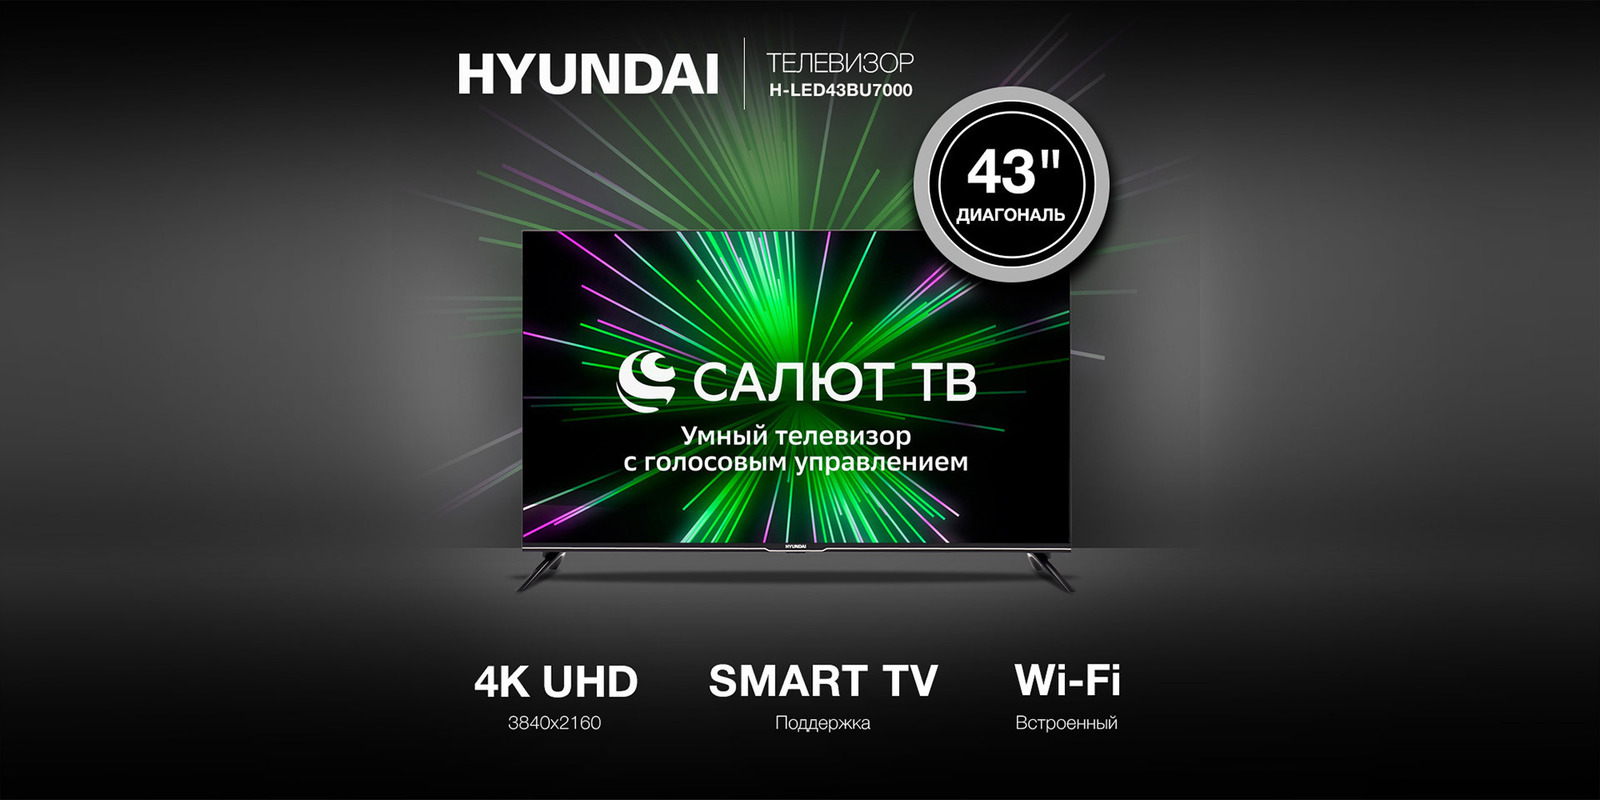 Телевизор Hyundai H-LED43BU7000